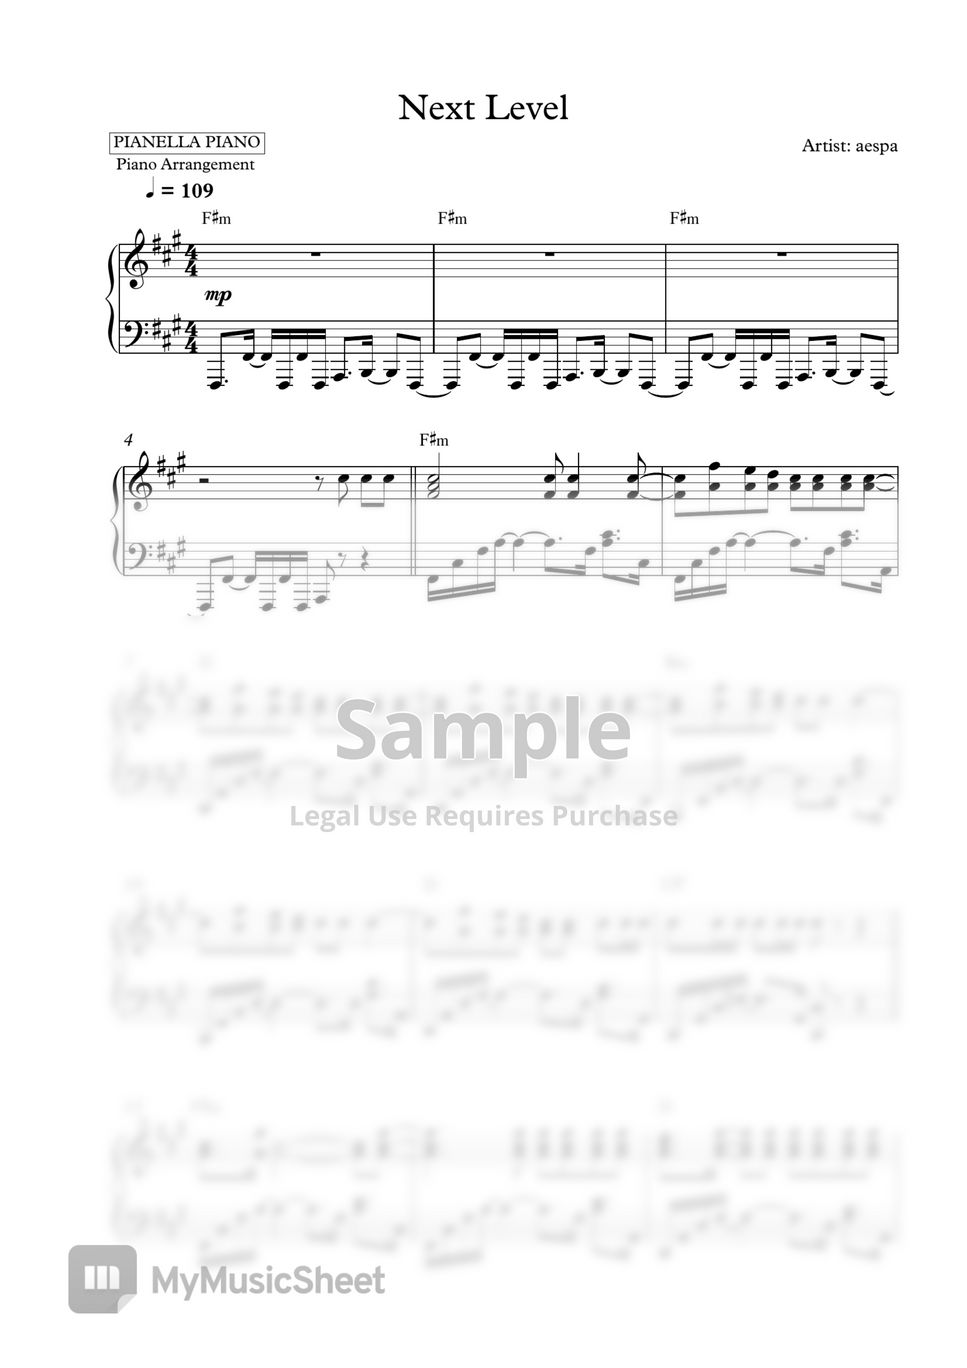 aespa - Next Level (Piano Sheet) by Pianella Piano